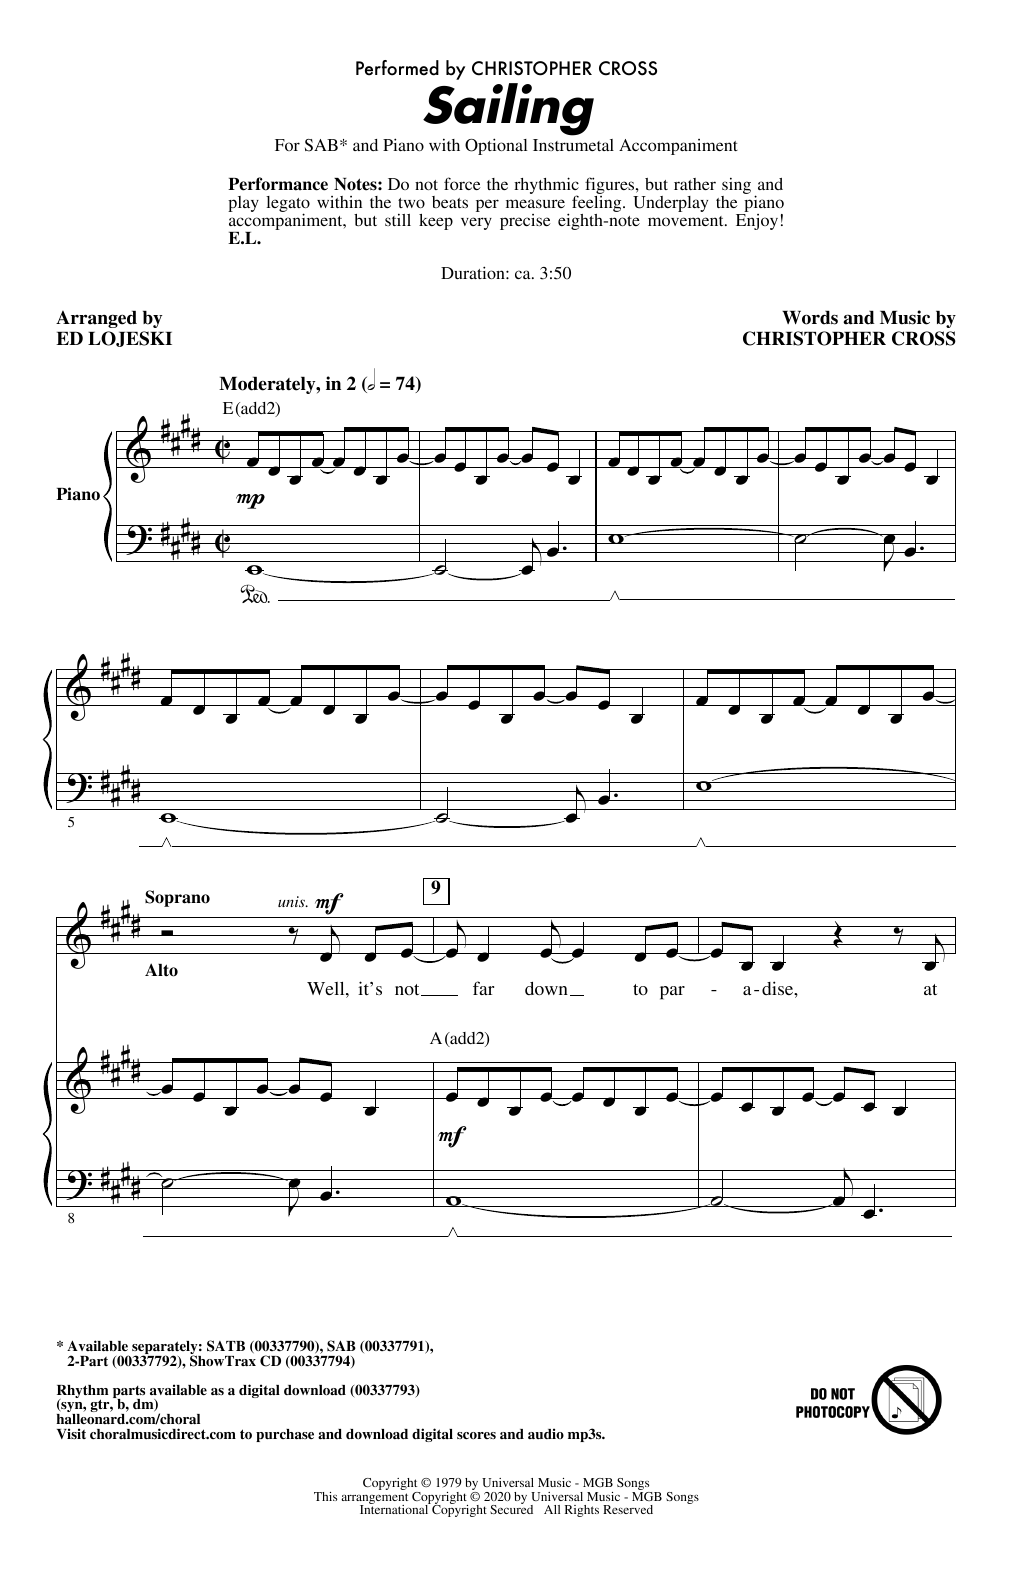 Christopher Cross Sailing (arr. Ed Lojeski) Sheet Music Notes & Chords for SATB Choir - Download or Print PDF